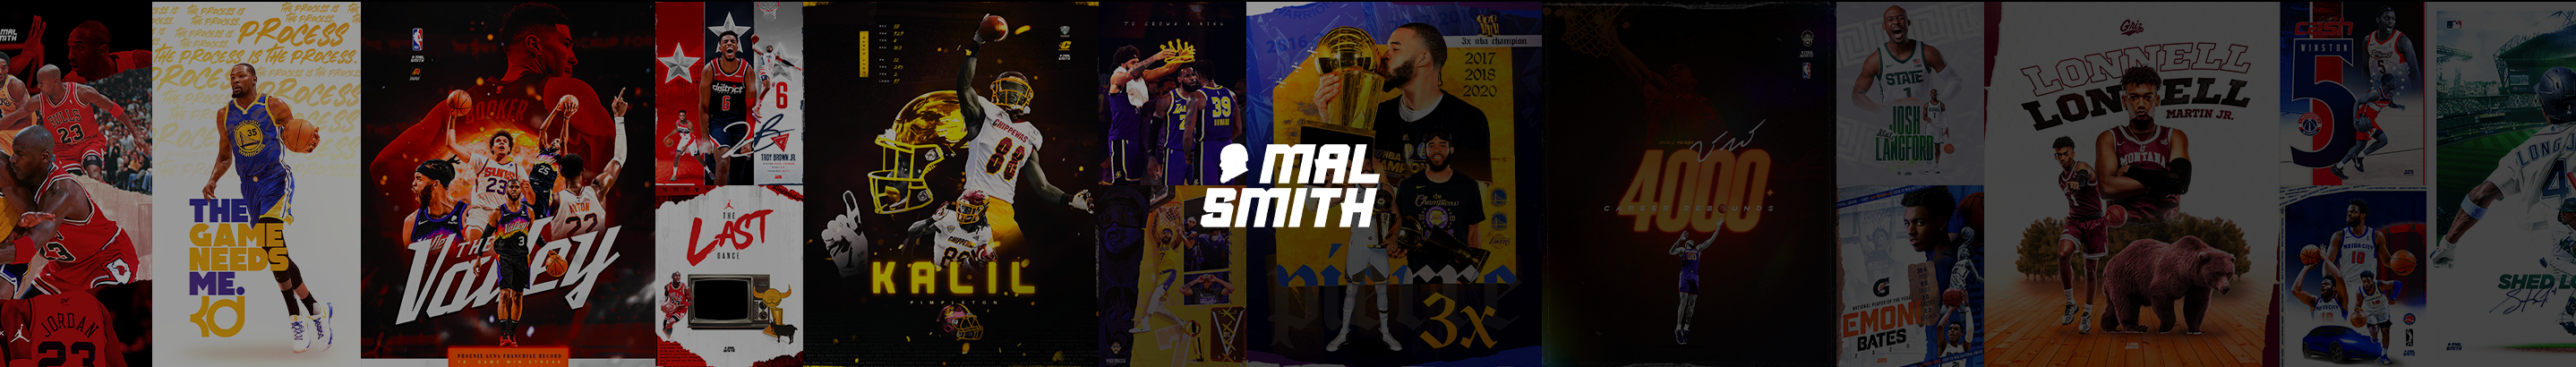 Mal Smith's profile banner